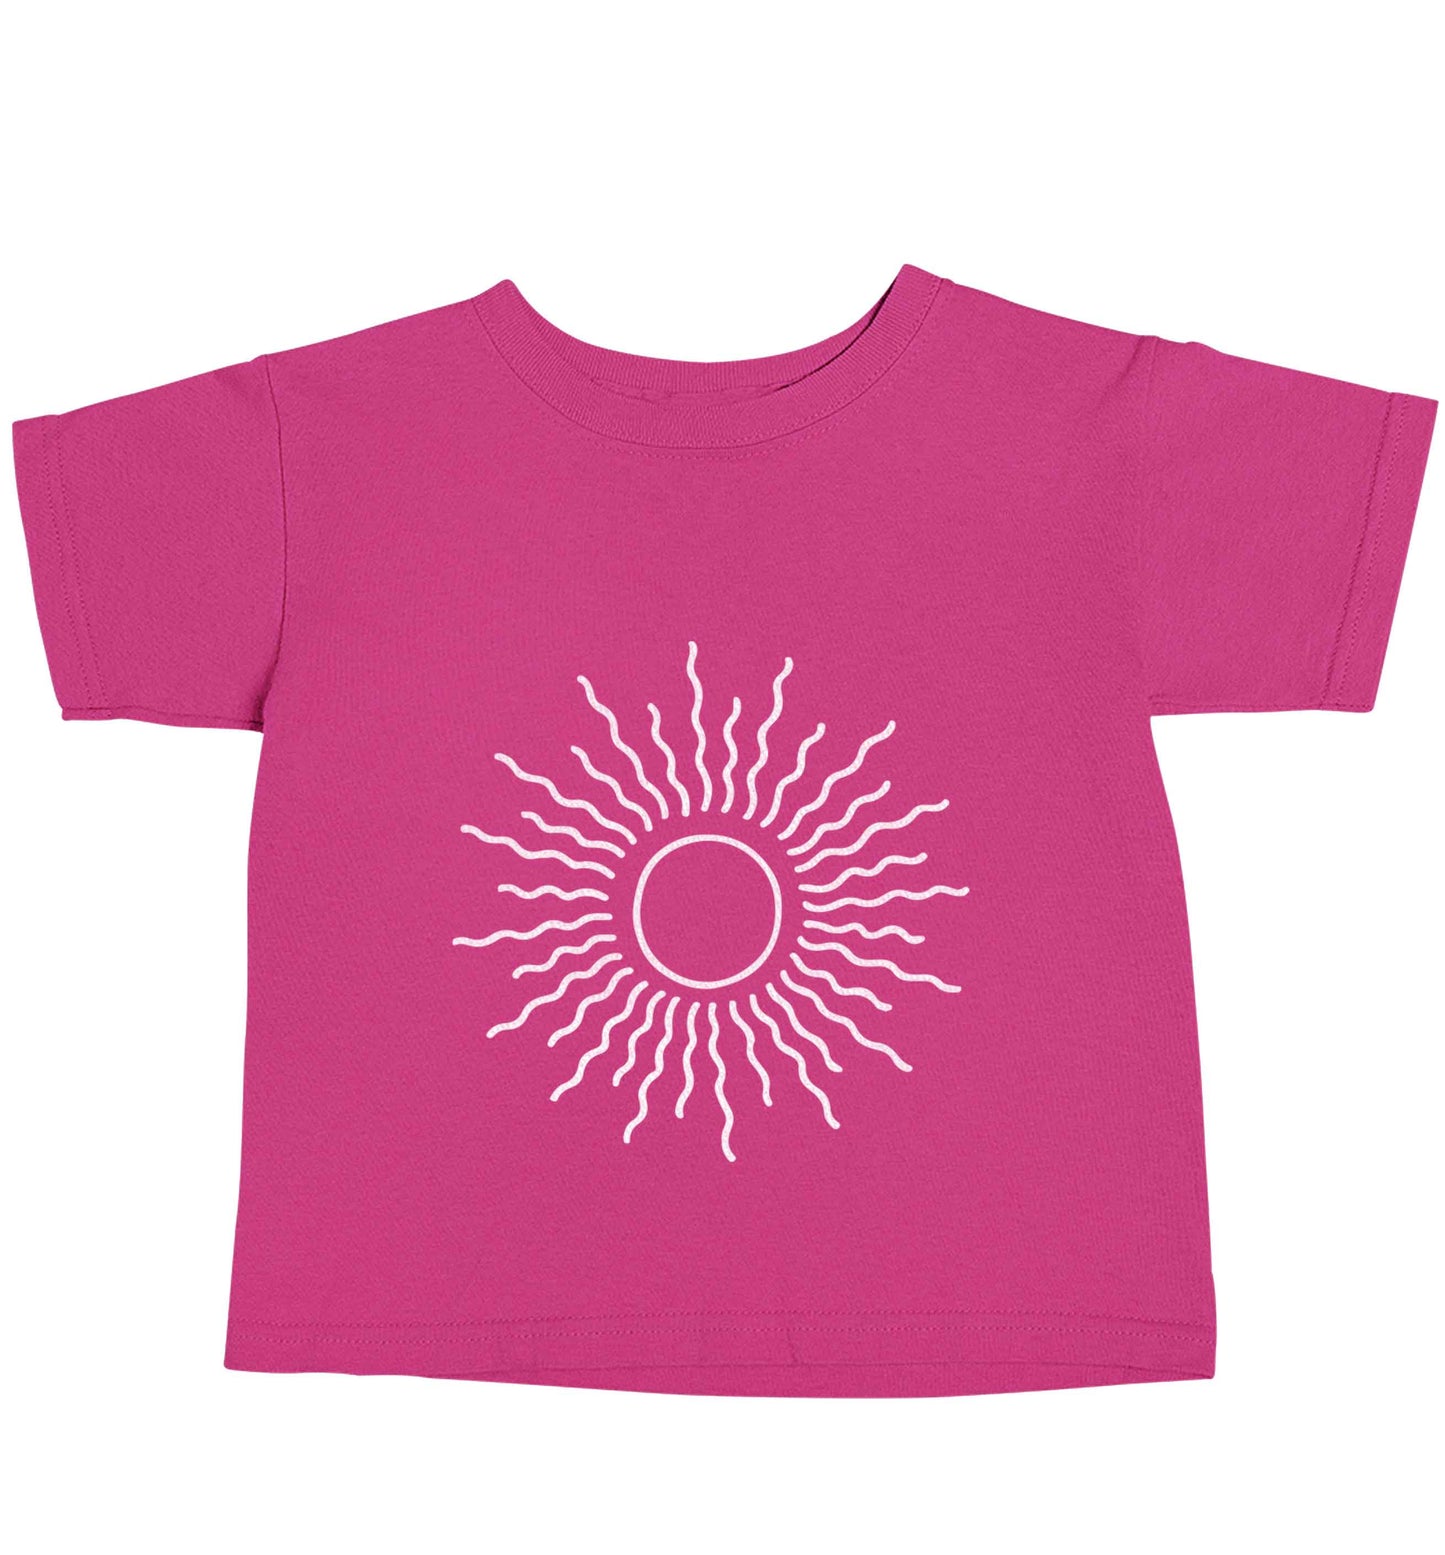 Sun illustration pink baby toddler Tshirt 2 Years